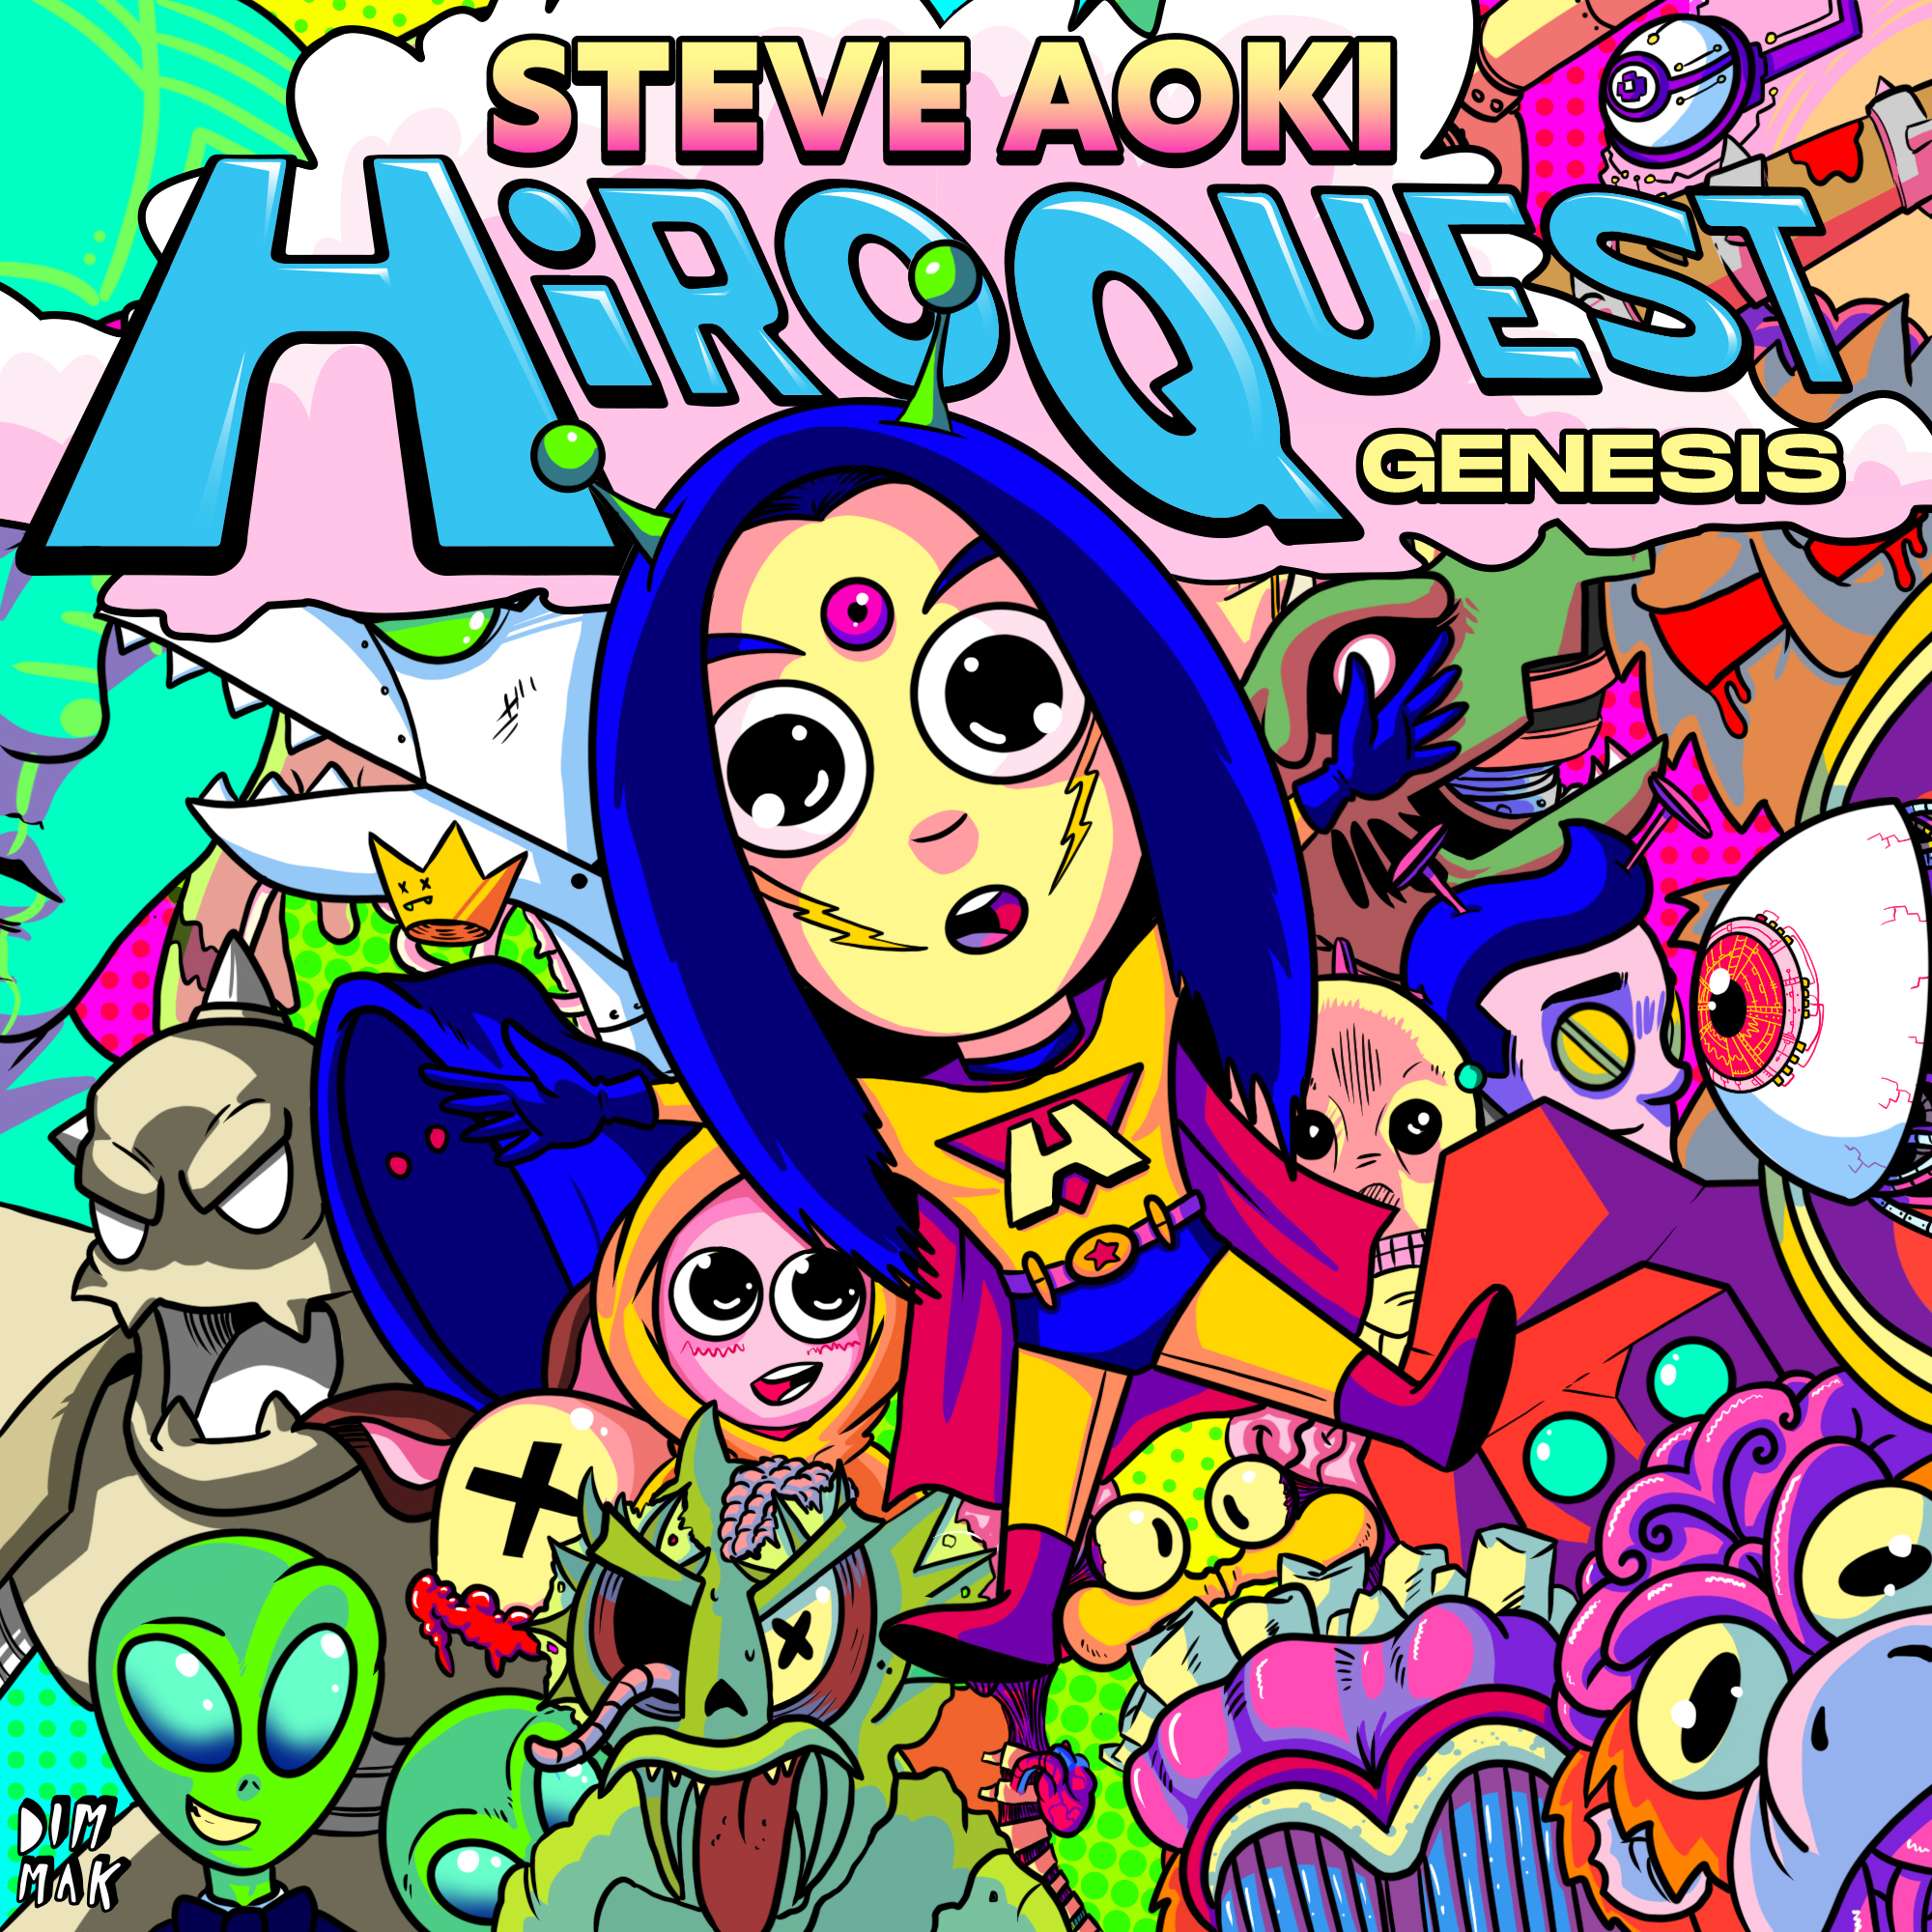 Steve Aoki HiROQUEST: Genesis cover artwork